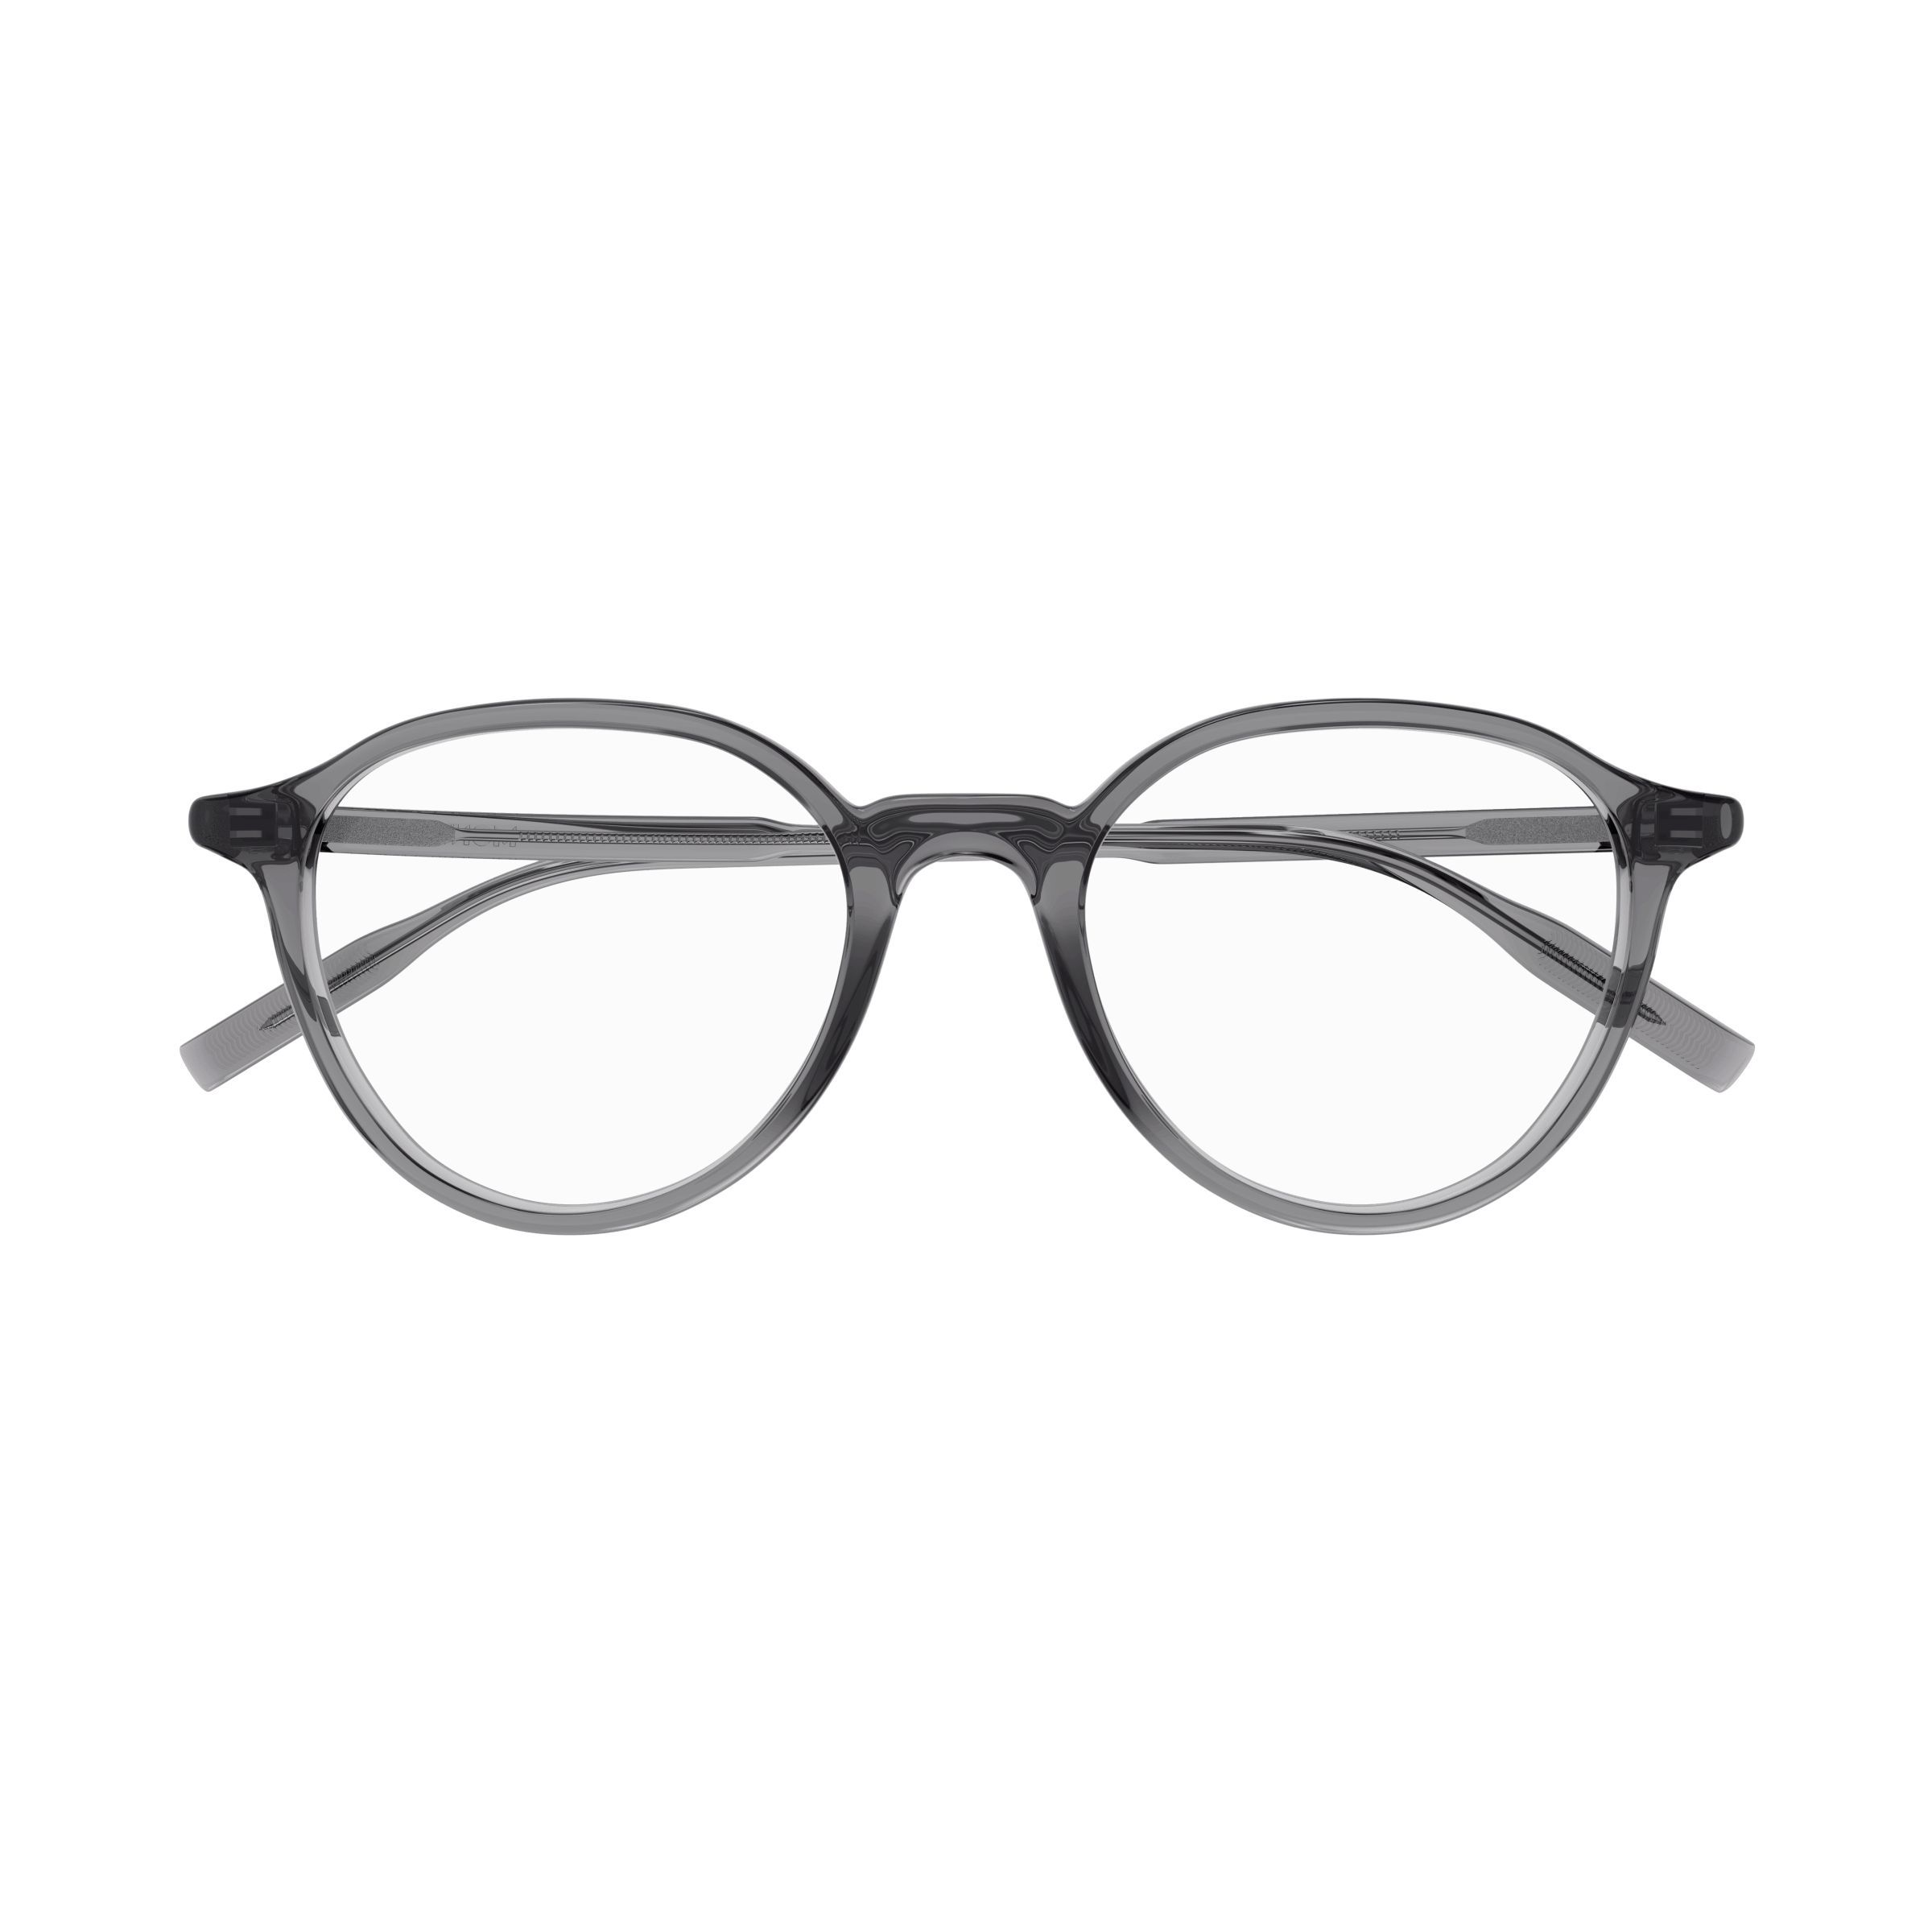 MB0291O Panthos Eyeglasses 003 - size 50